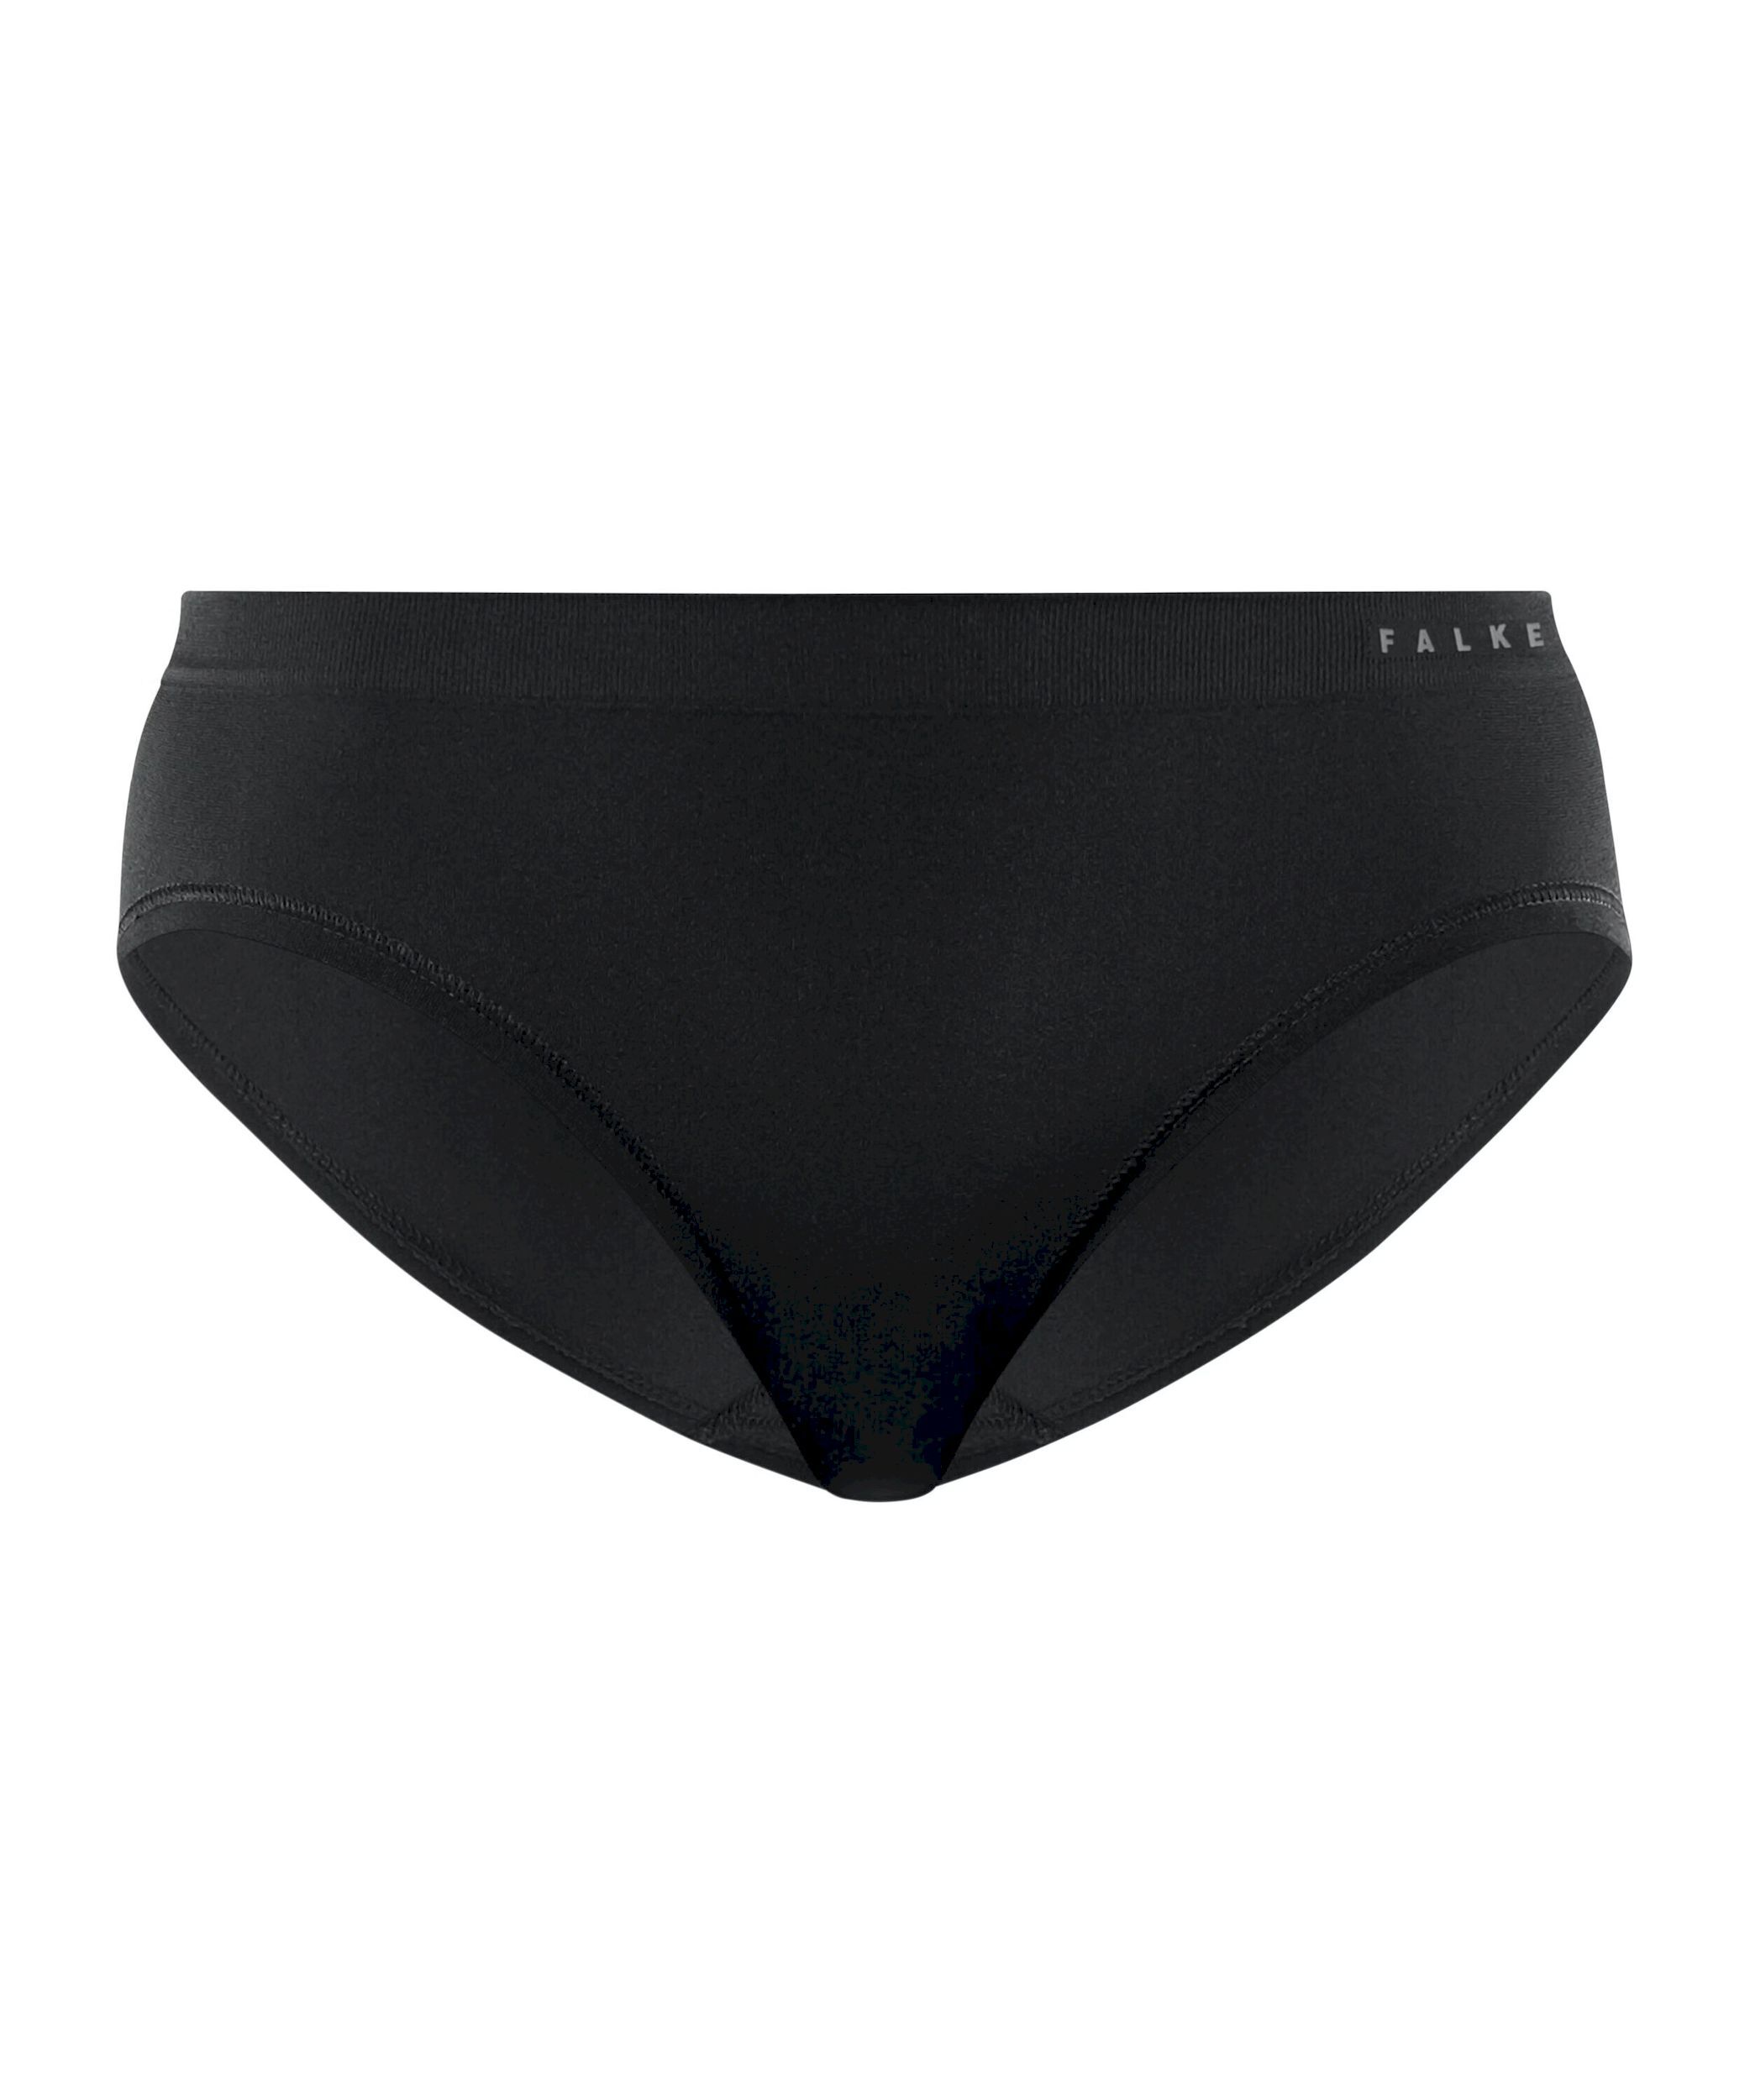 Falke C Panties Regular - Underwear - Women's